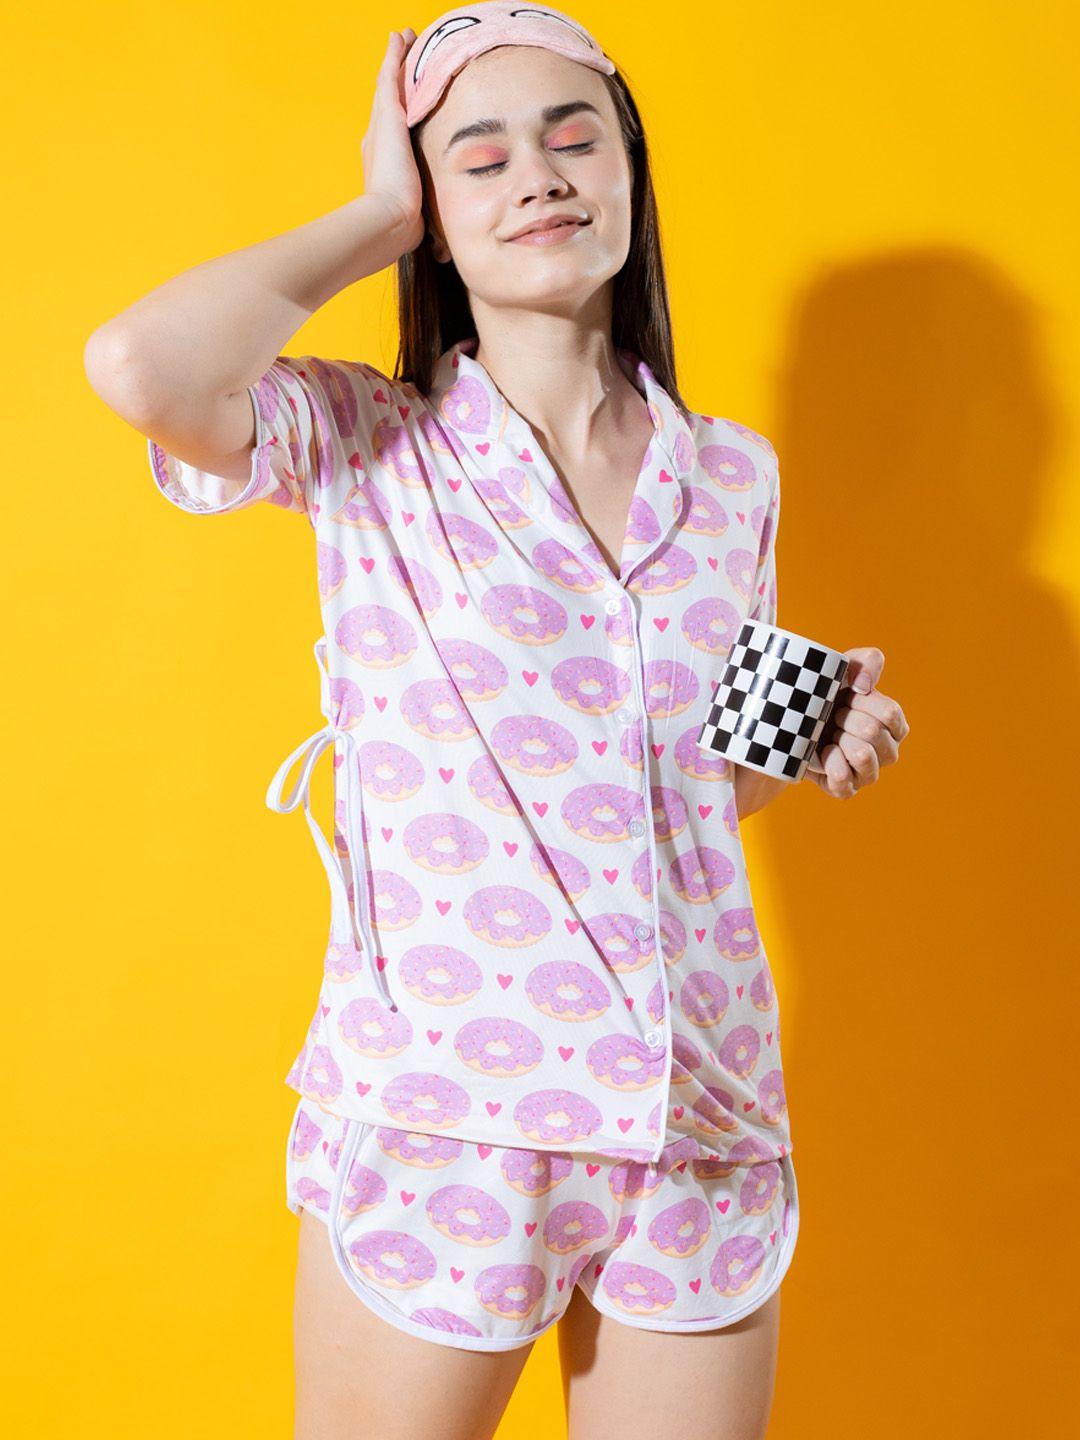 stylecast x hersheinbox pink conversational printed shirt and shorts